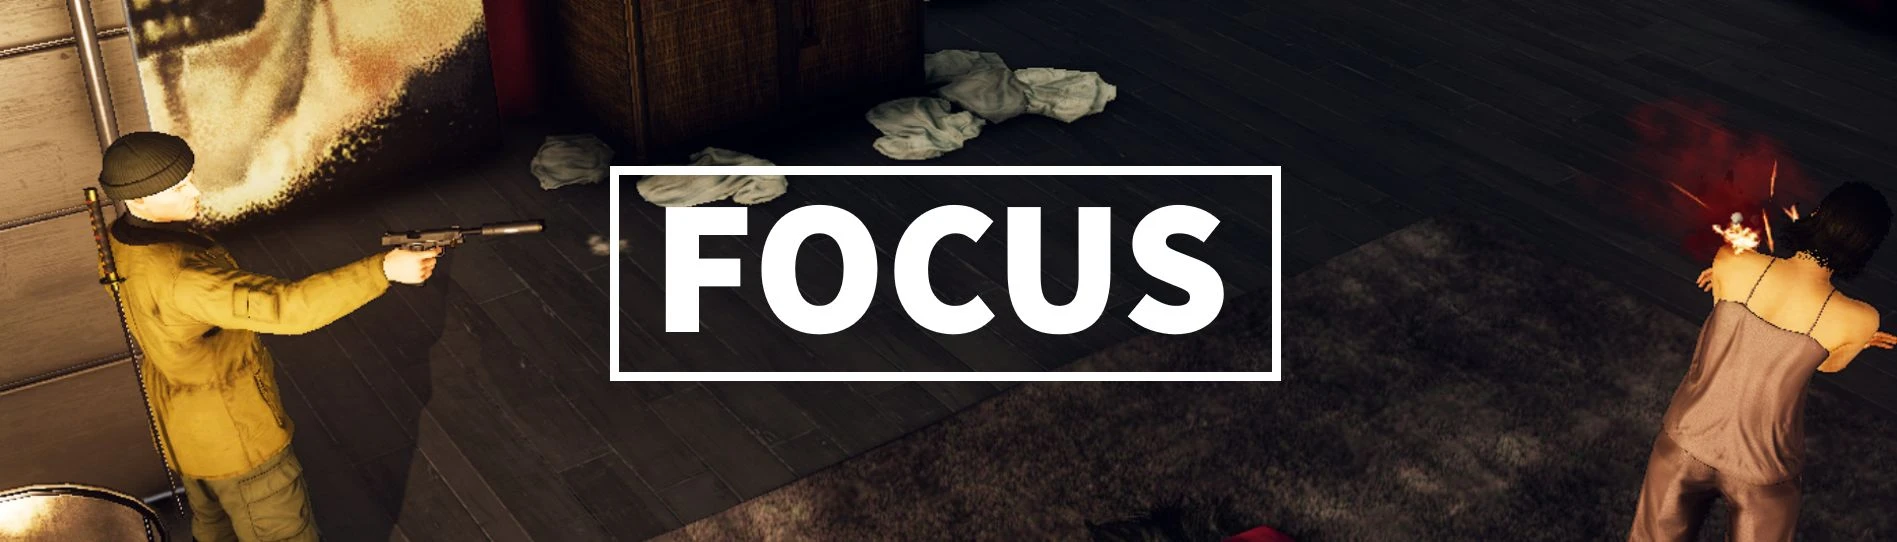 Focus at Hitman 3 Nexus - Mods and community